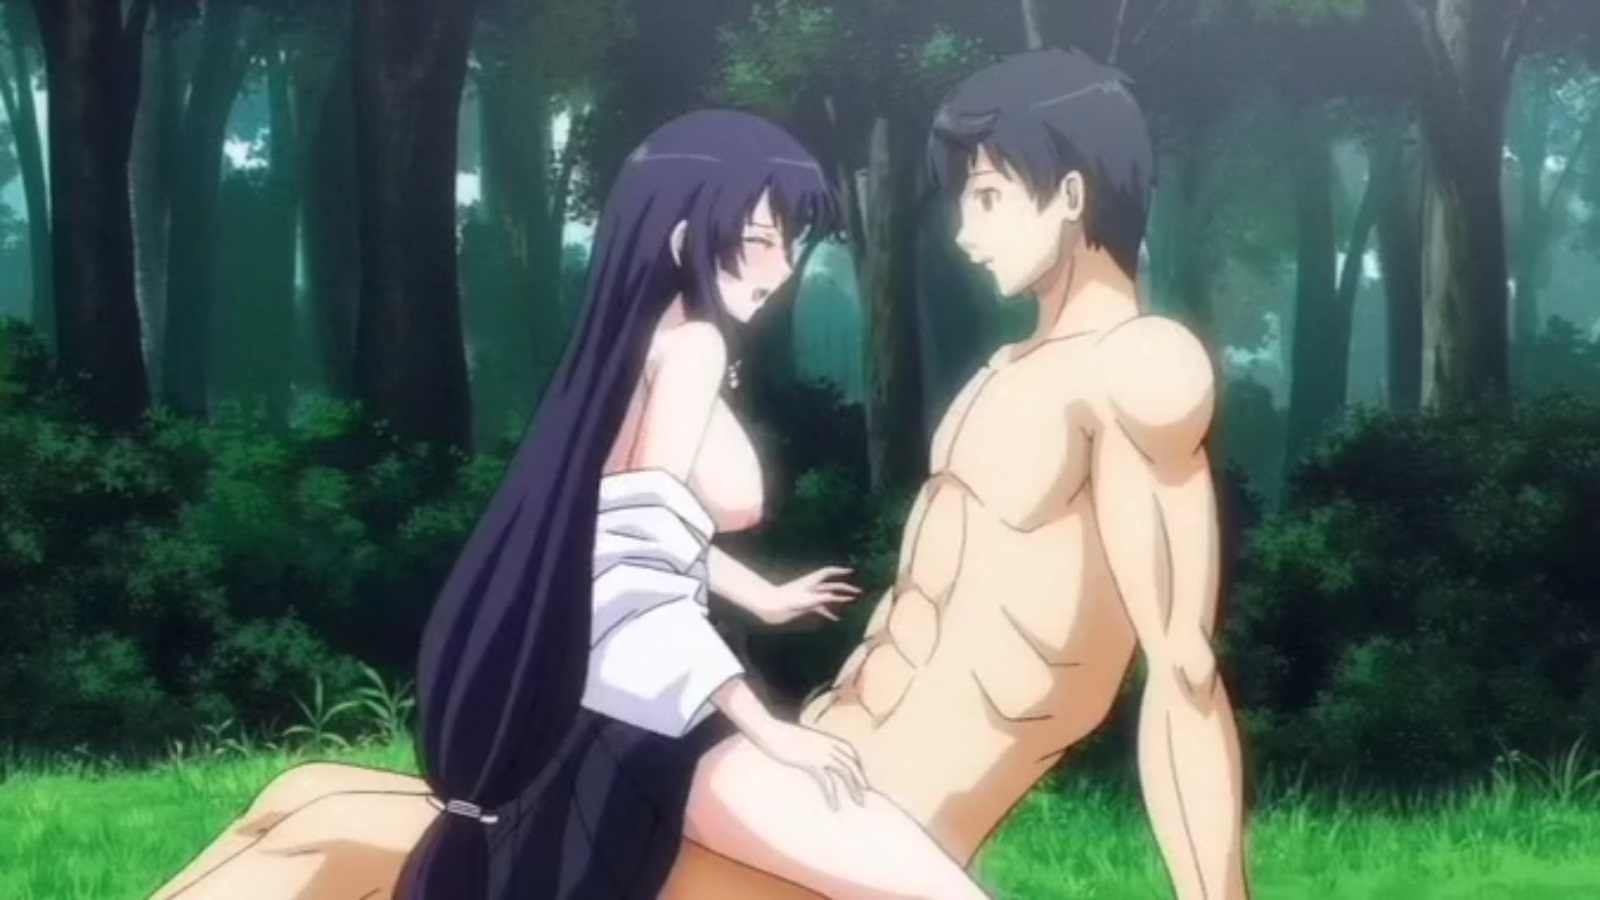 Manga coed sex pics best adult free images